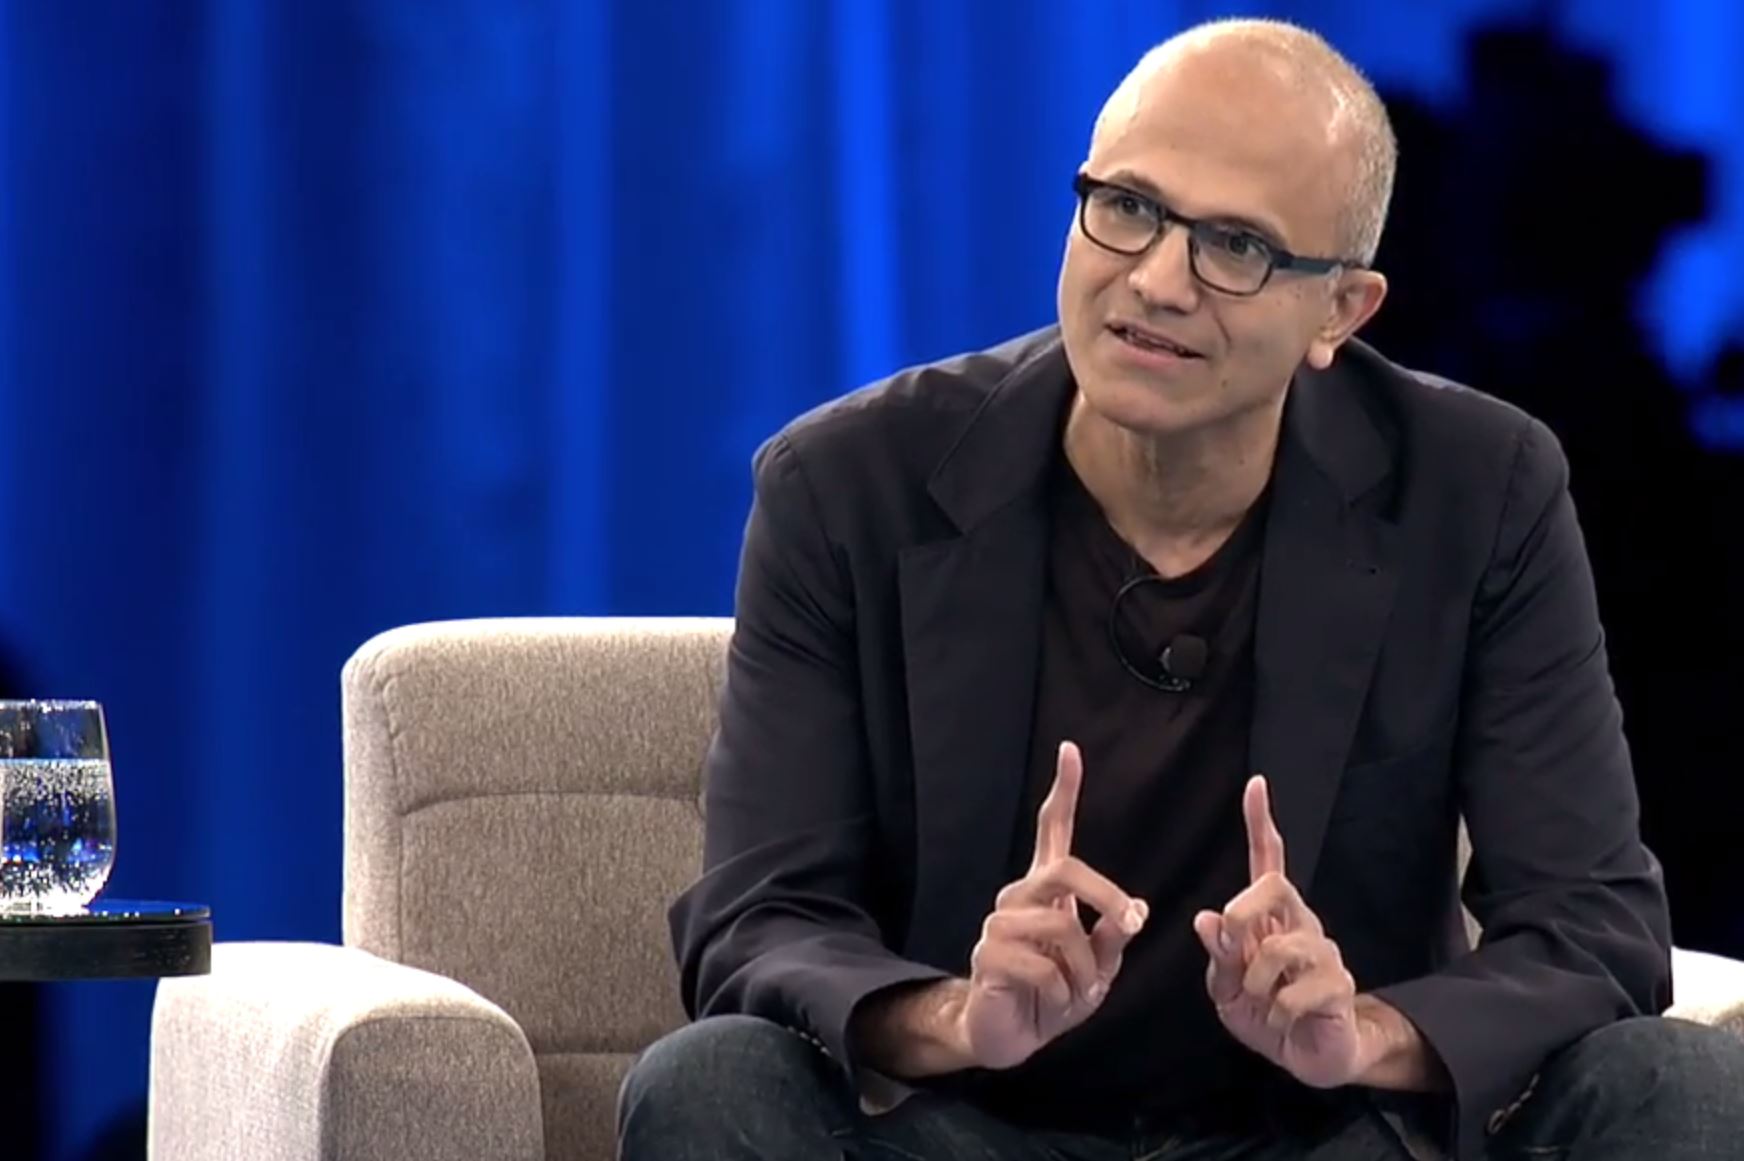 Microsoft CEO Satya Nadella joins Fred Hutch board